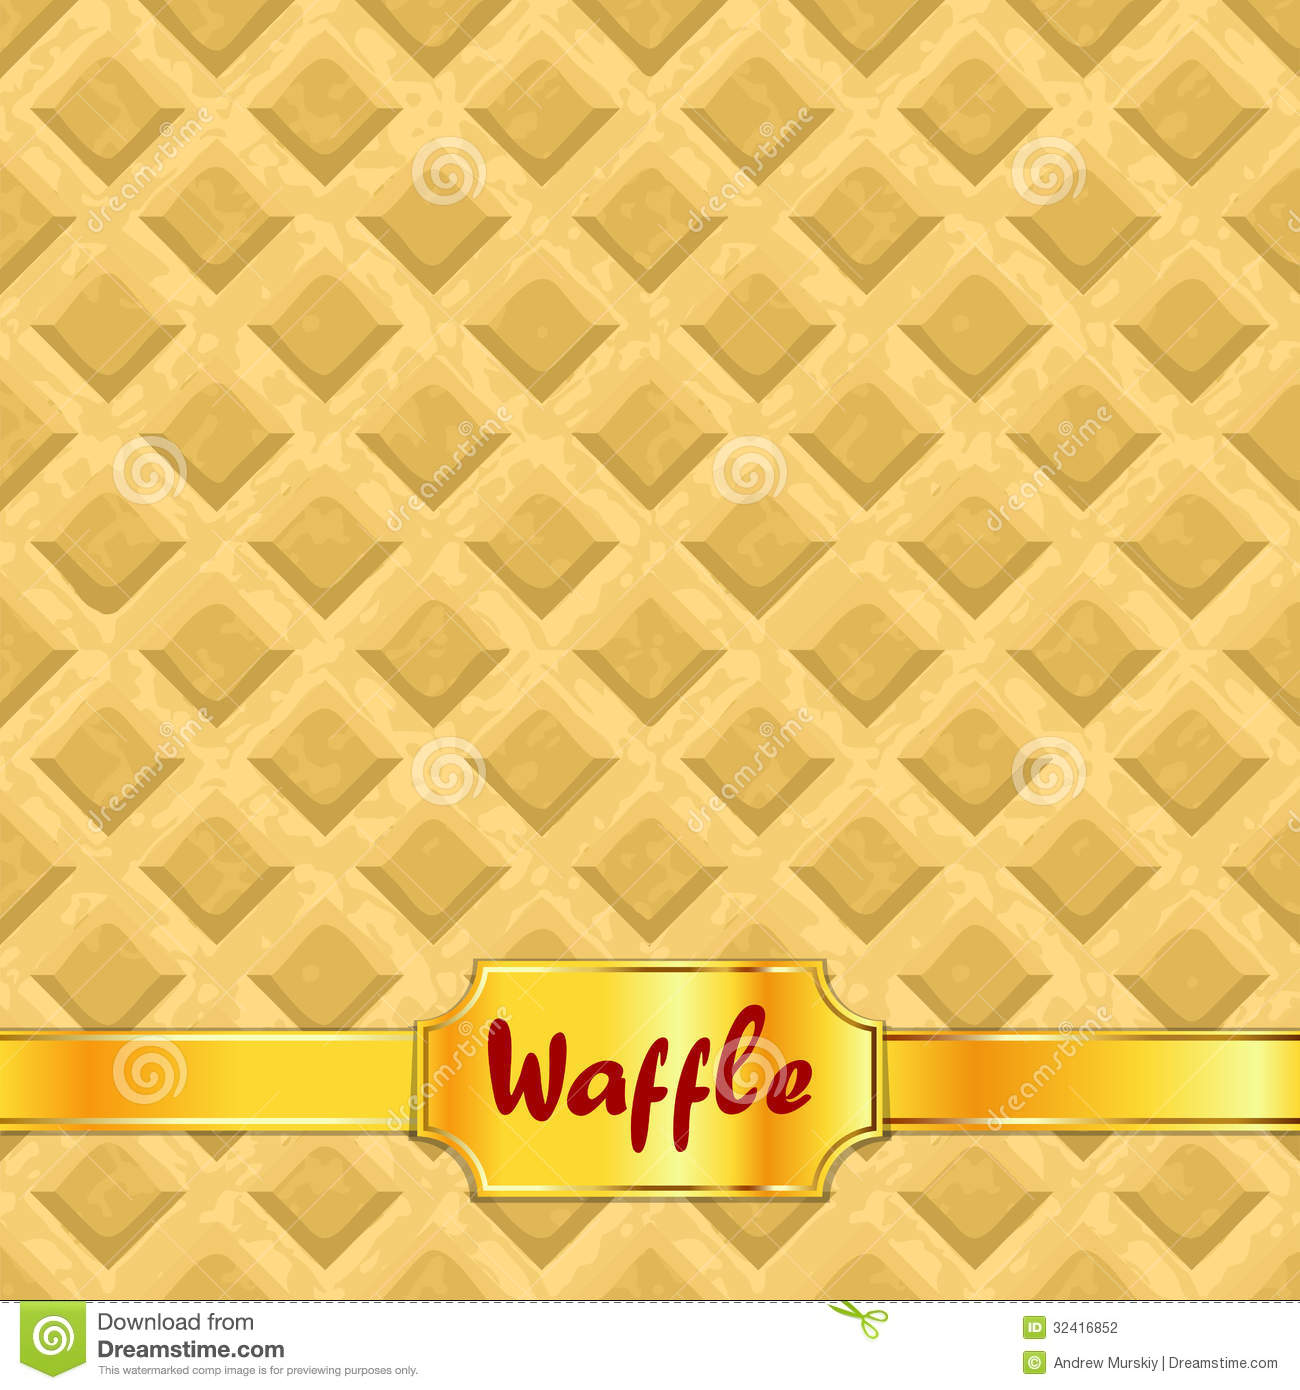 Waffle Texture Seamless